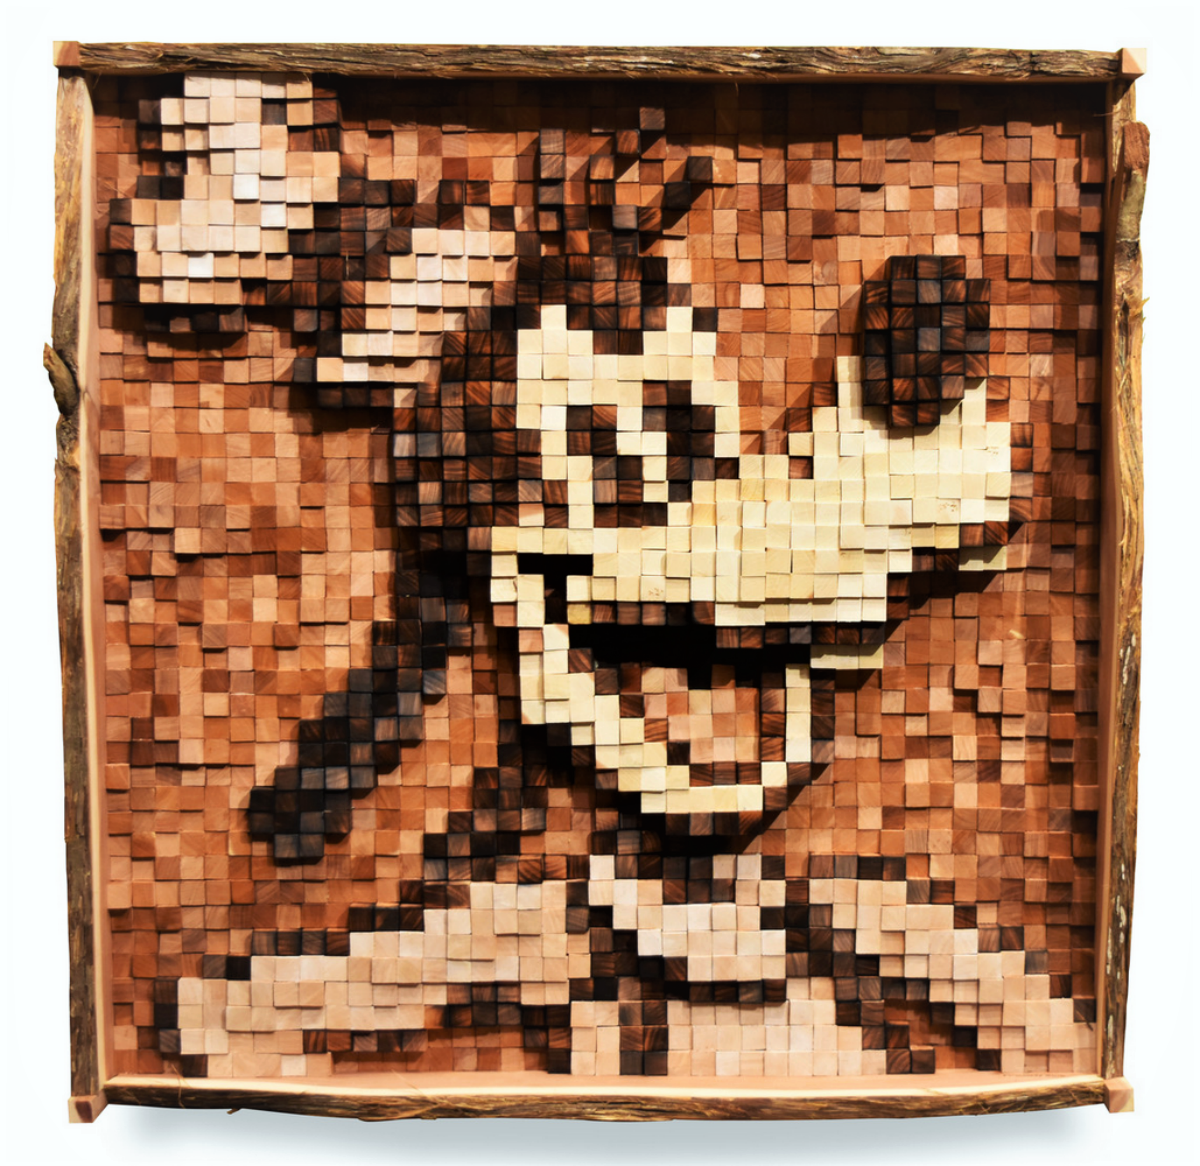 Wooden mosaic of Goofy